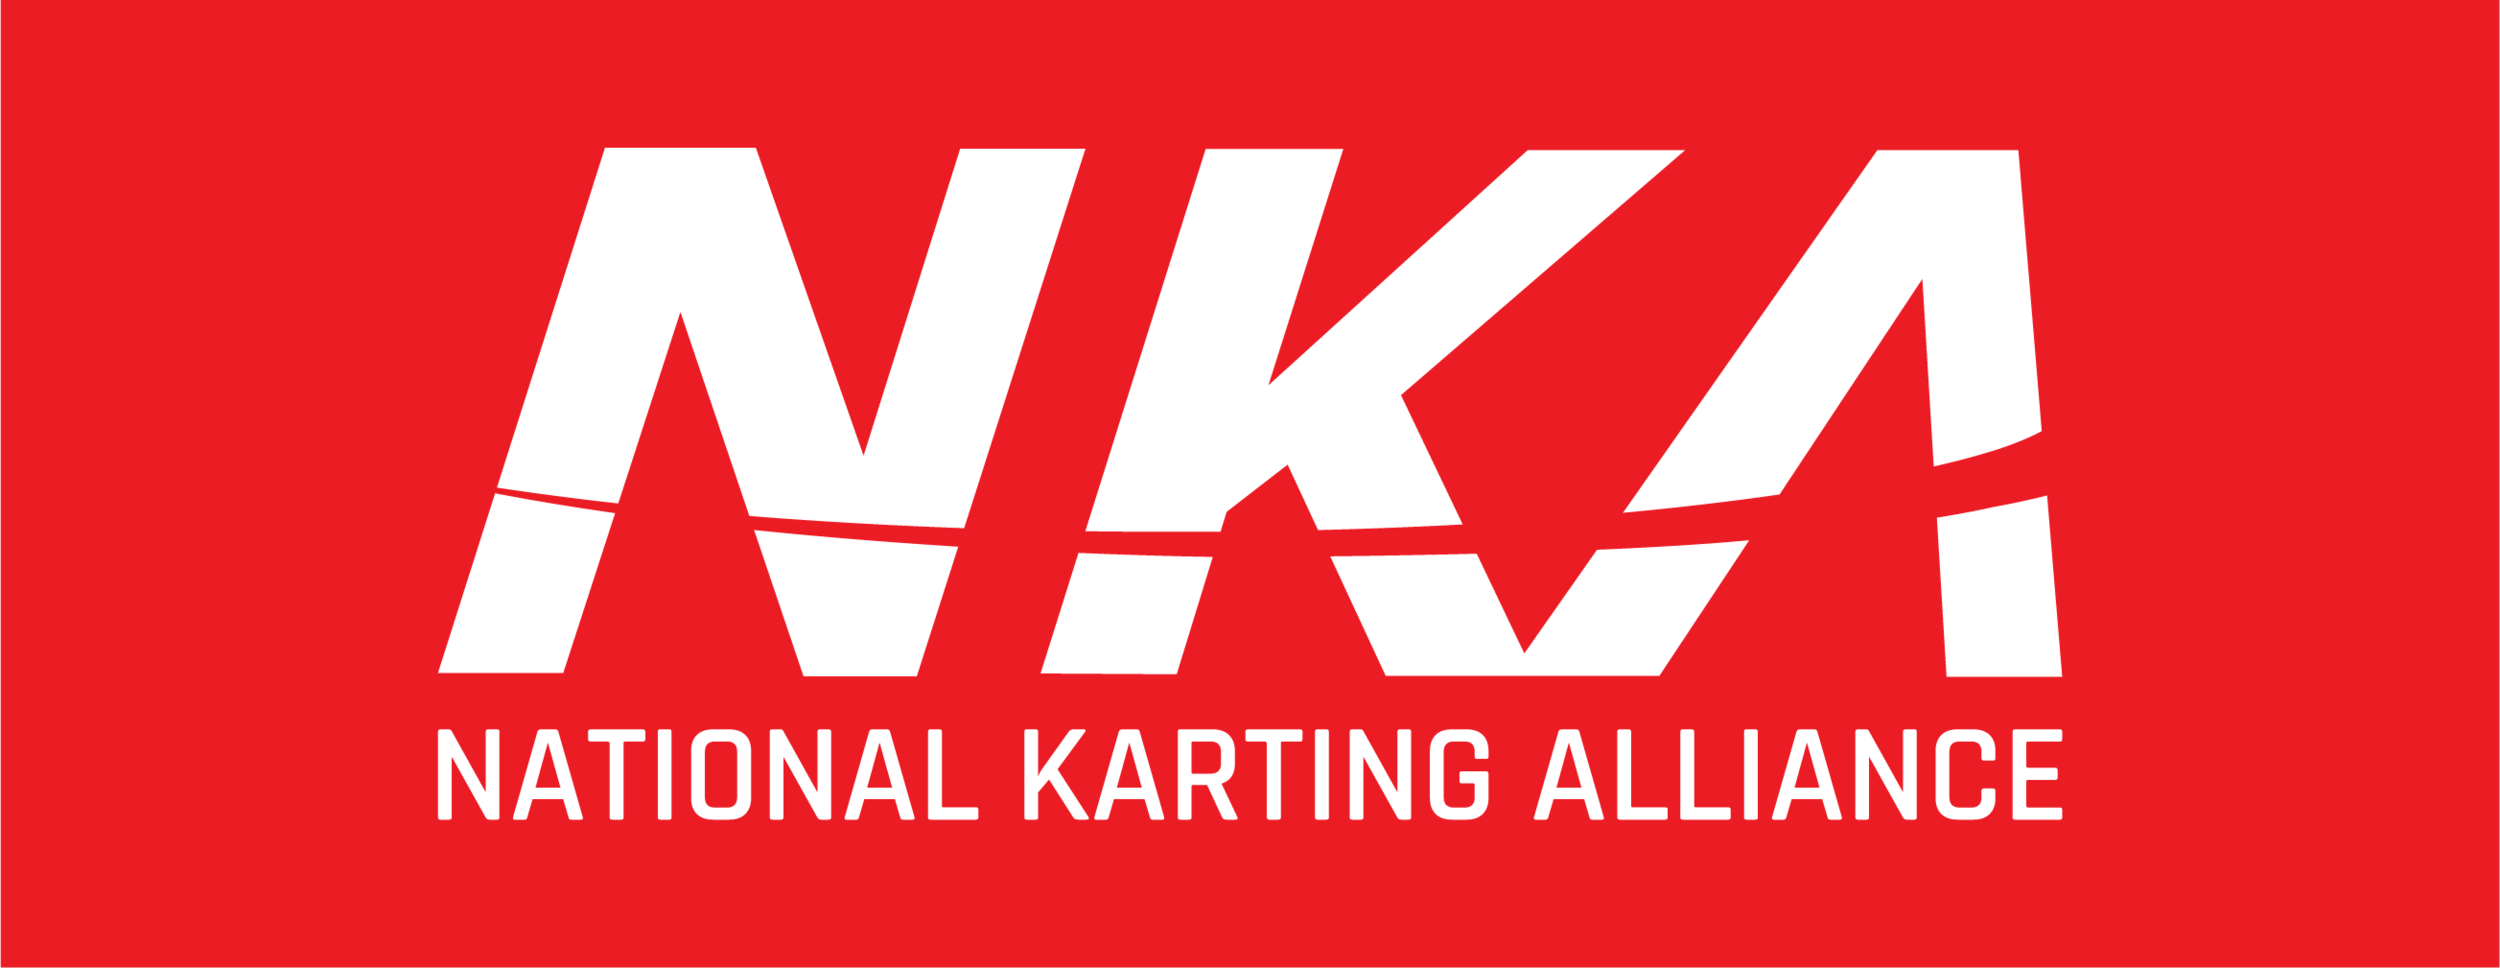 National Karting Alliance